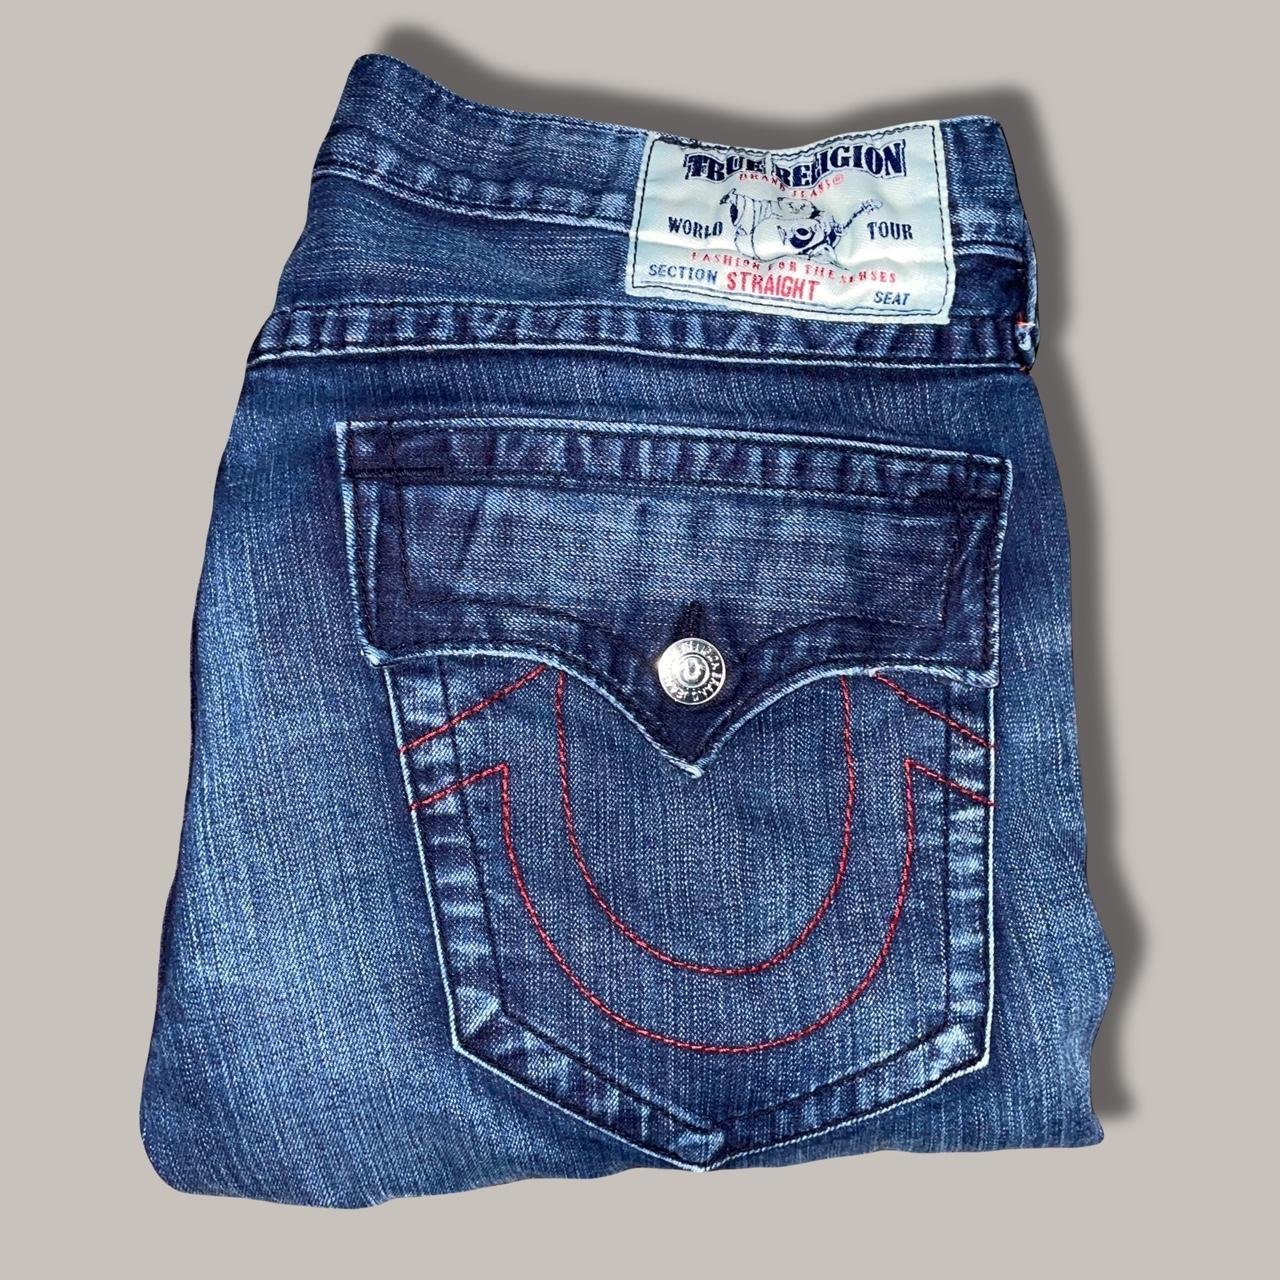 True religion jeans with red stitching Size 36 Waist... - Depop